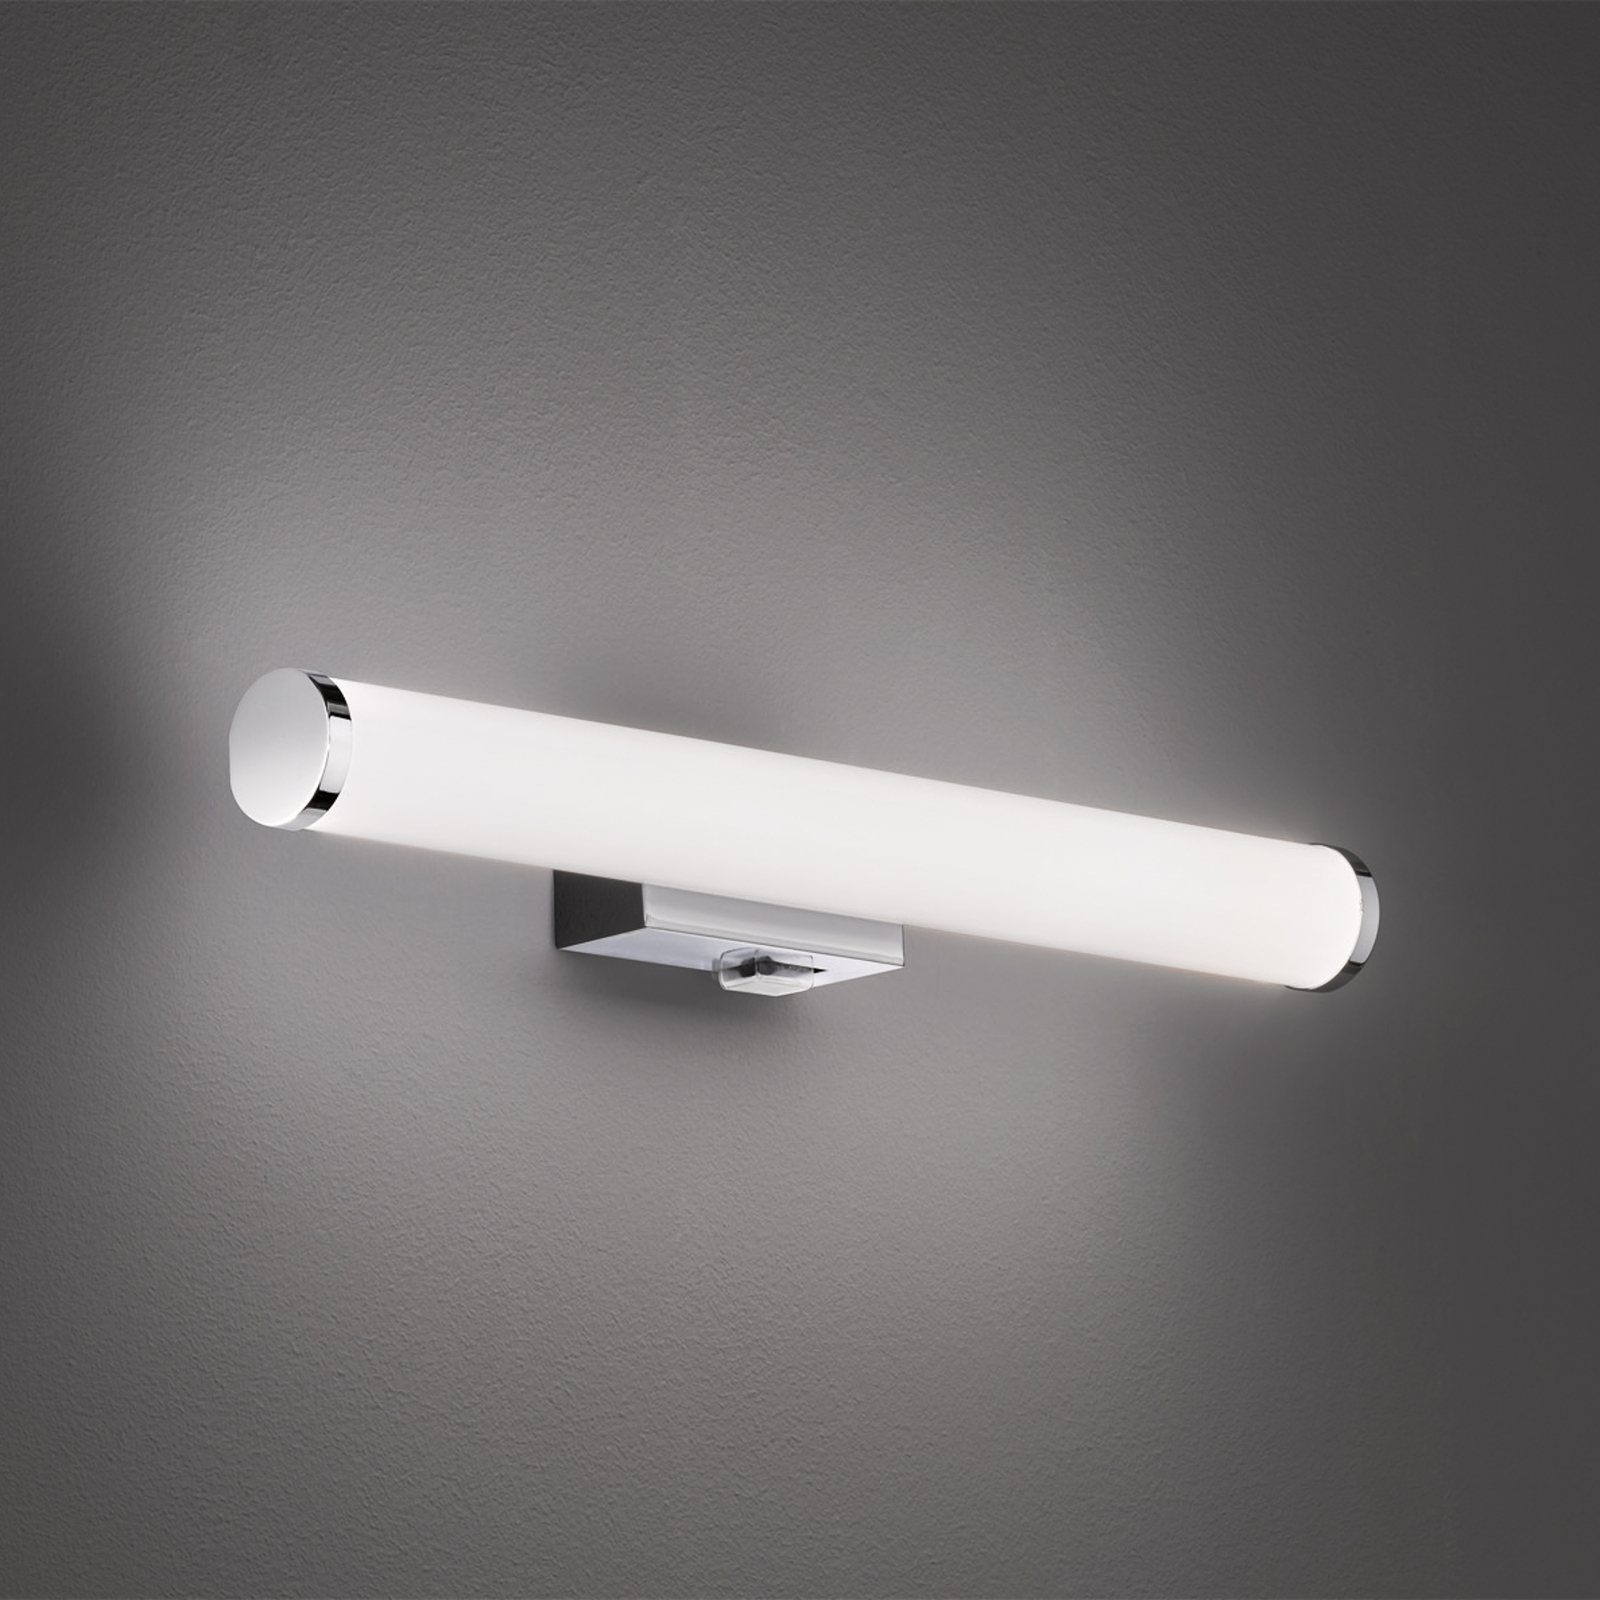 Mattimo LED wall light, width 40 cm, chrome